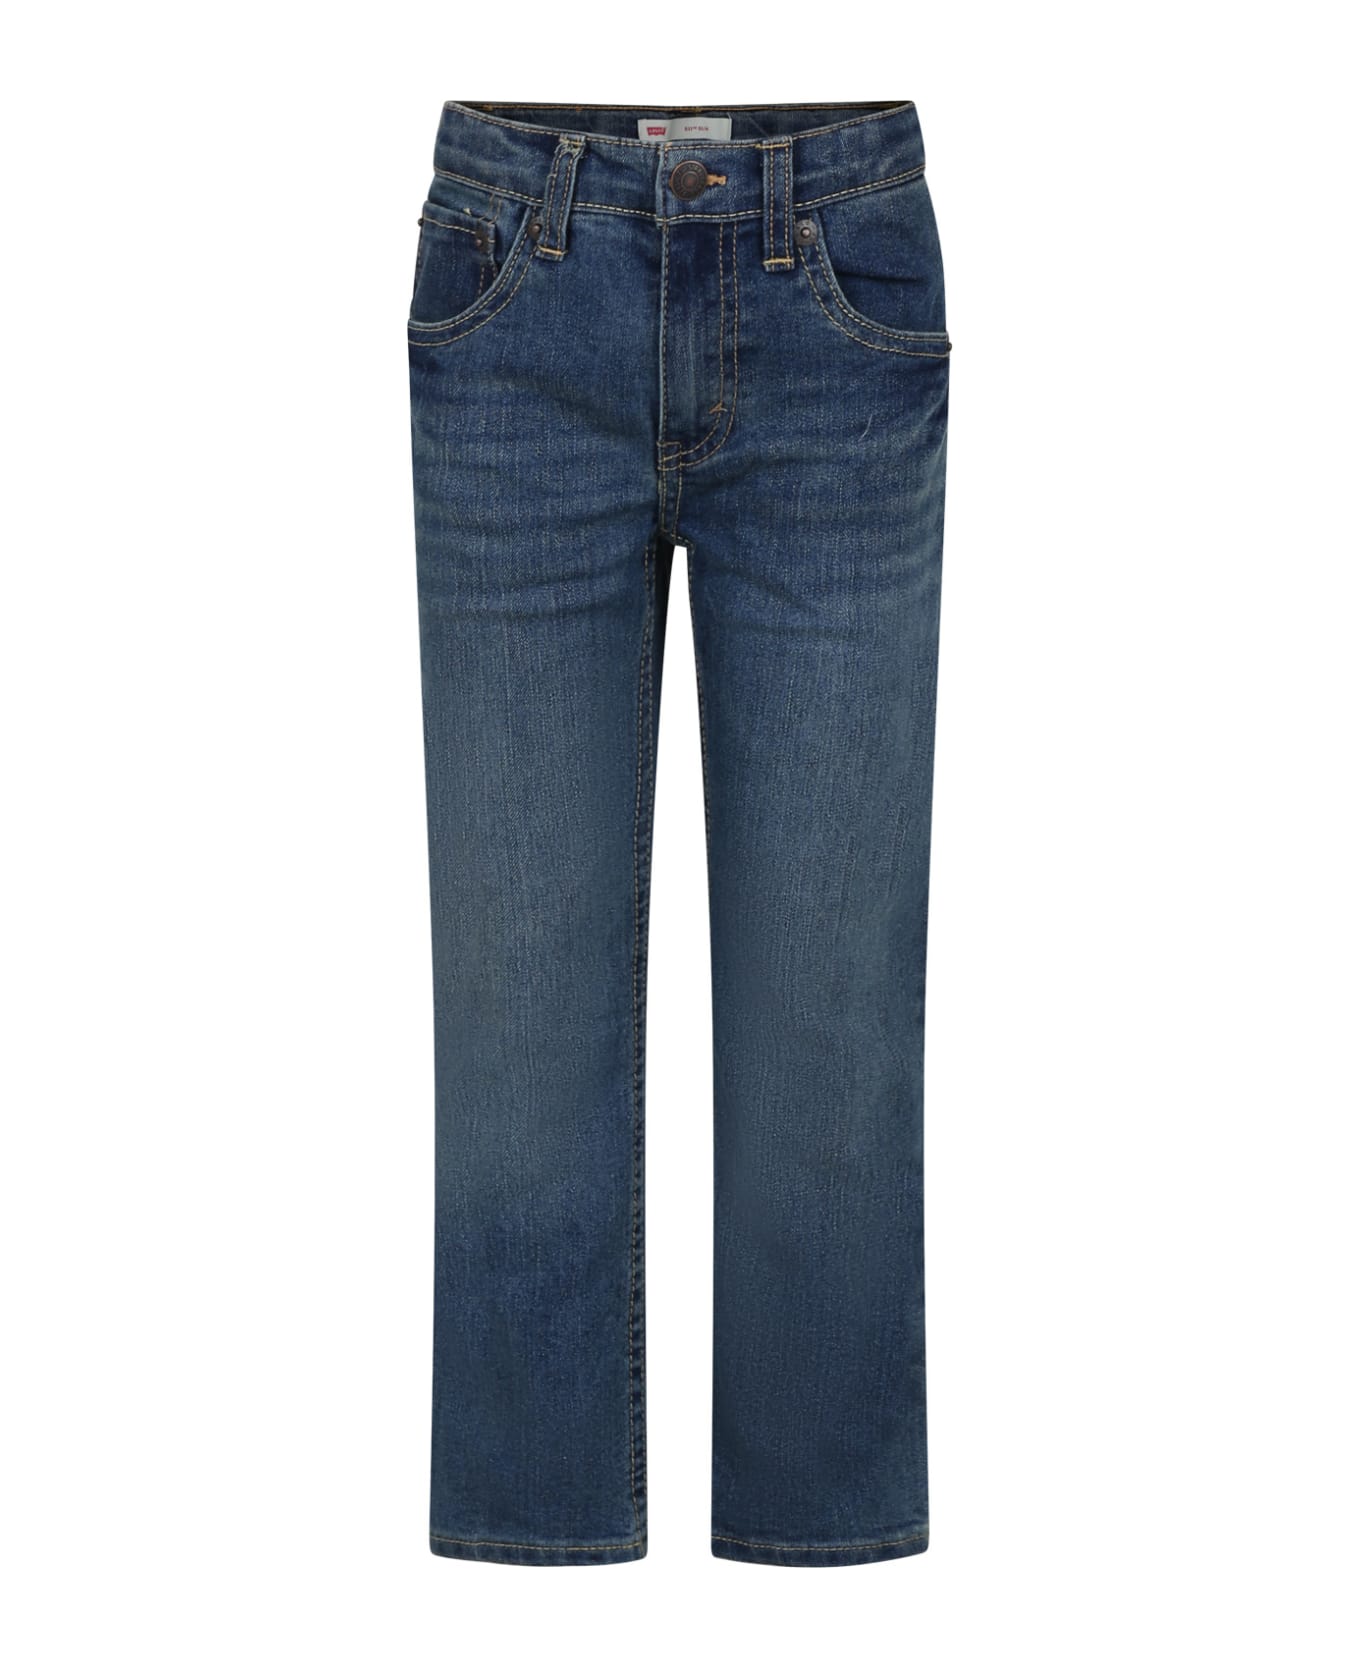 Levi's 511 Denim Jeans For Boy - Denim